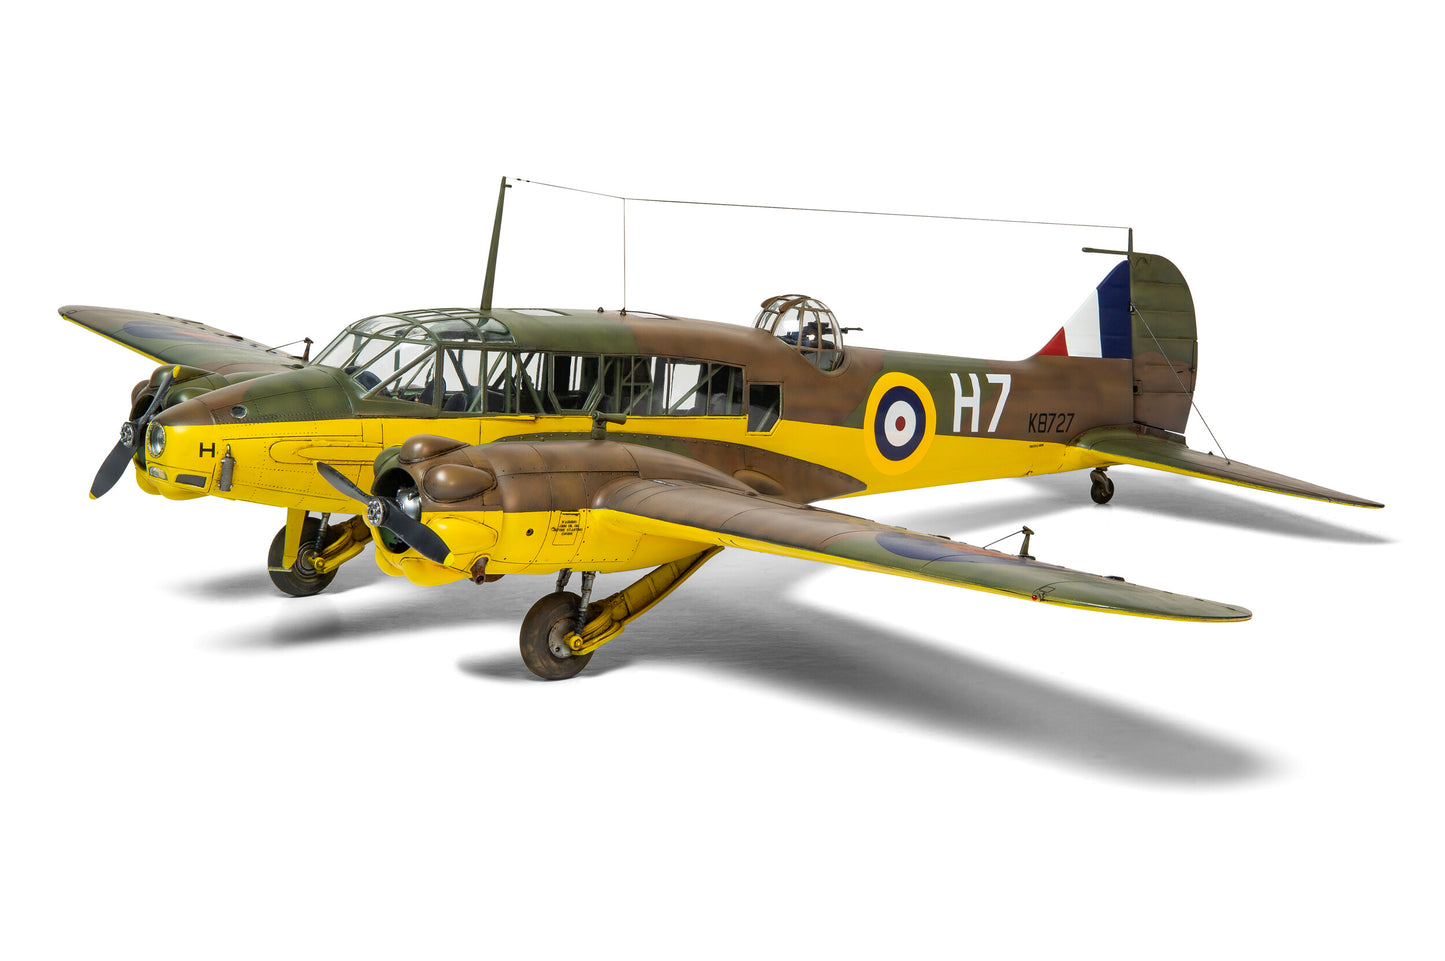 Airfix 1/48th scale Avro Anson Mk.I